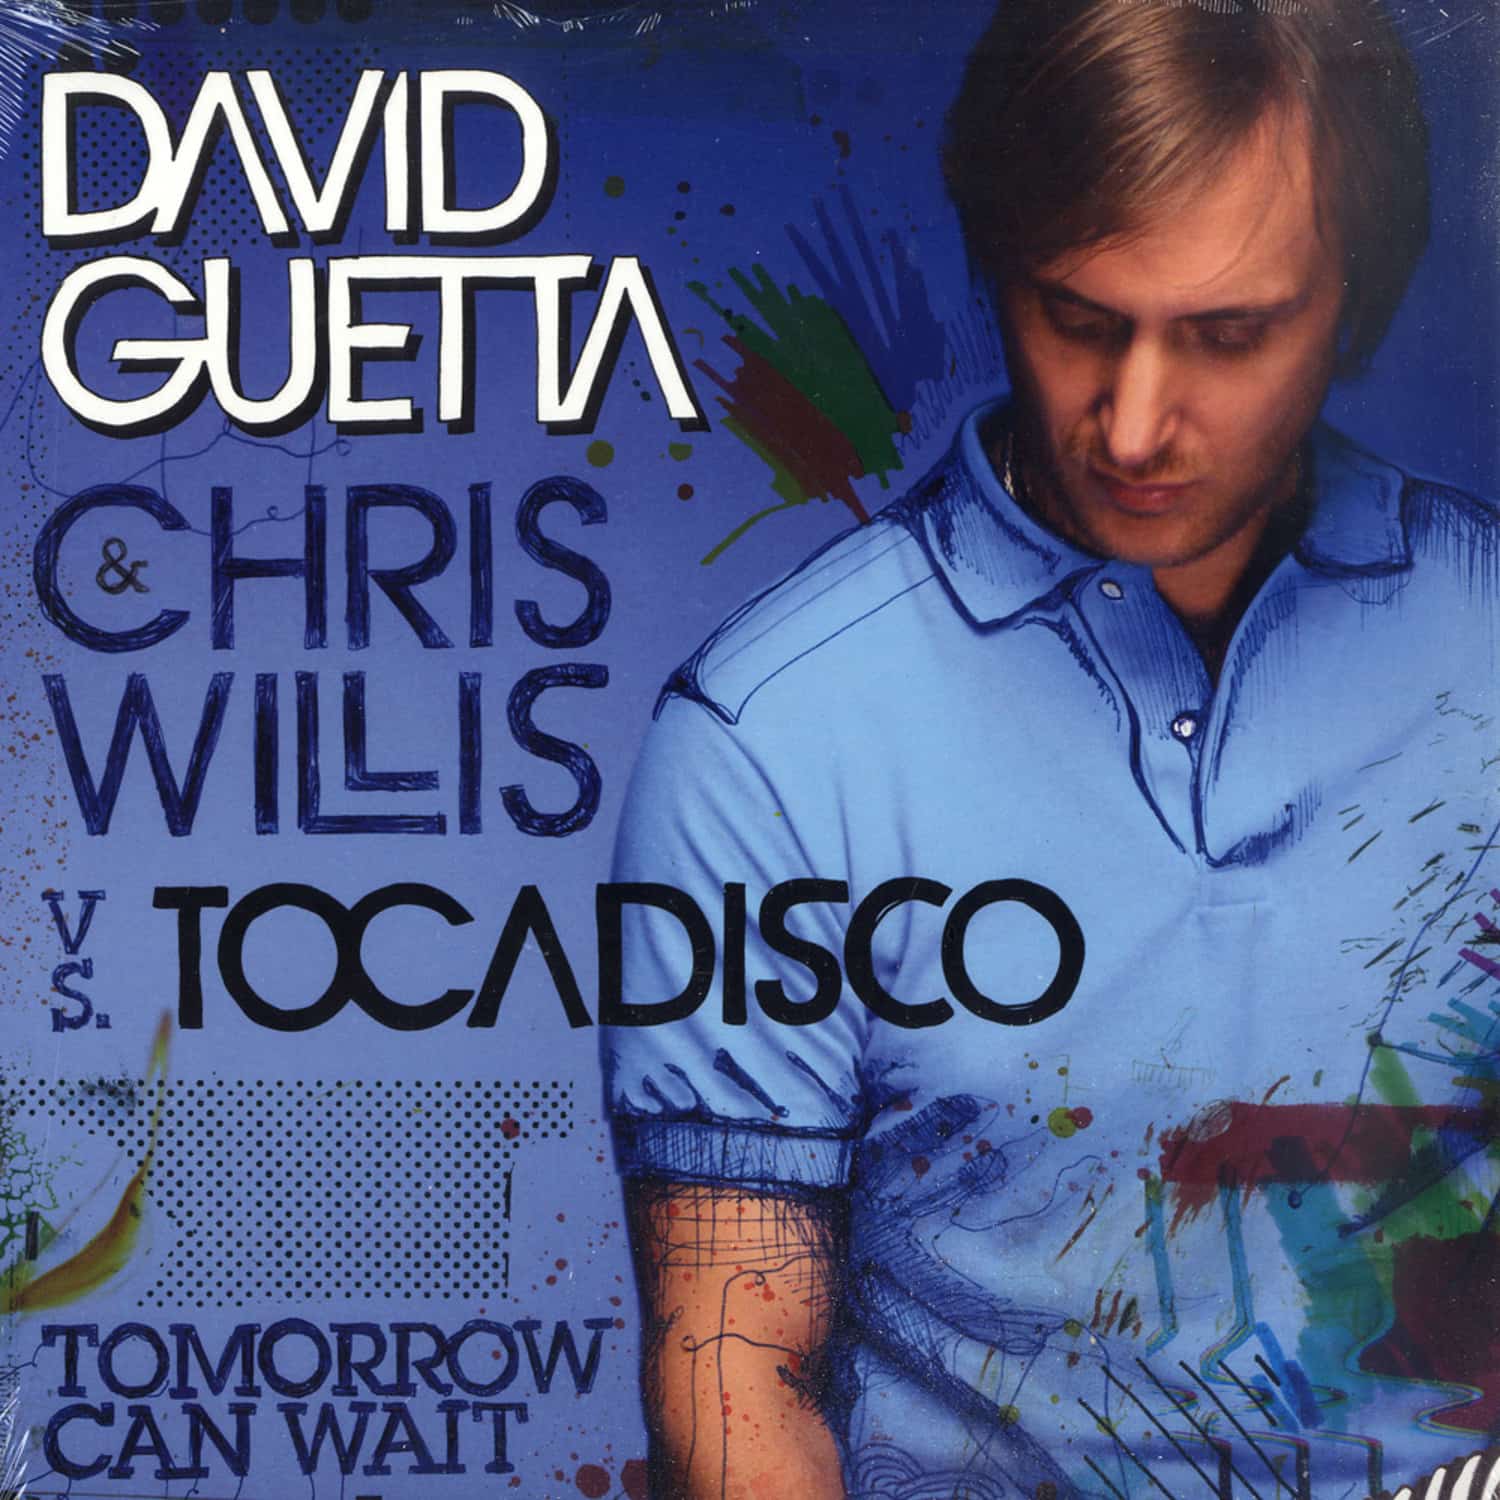 David Guetta & Chris Willis vs. Tocadisco - TOMORROW CAN WAIT